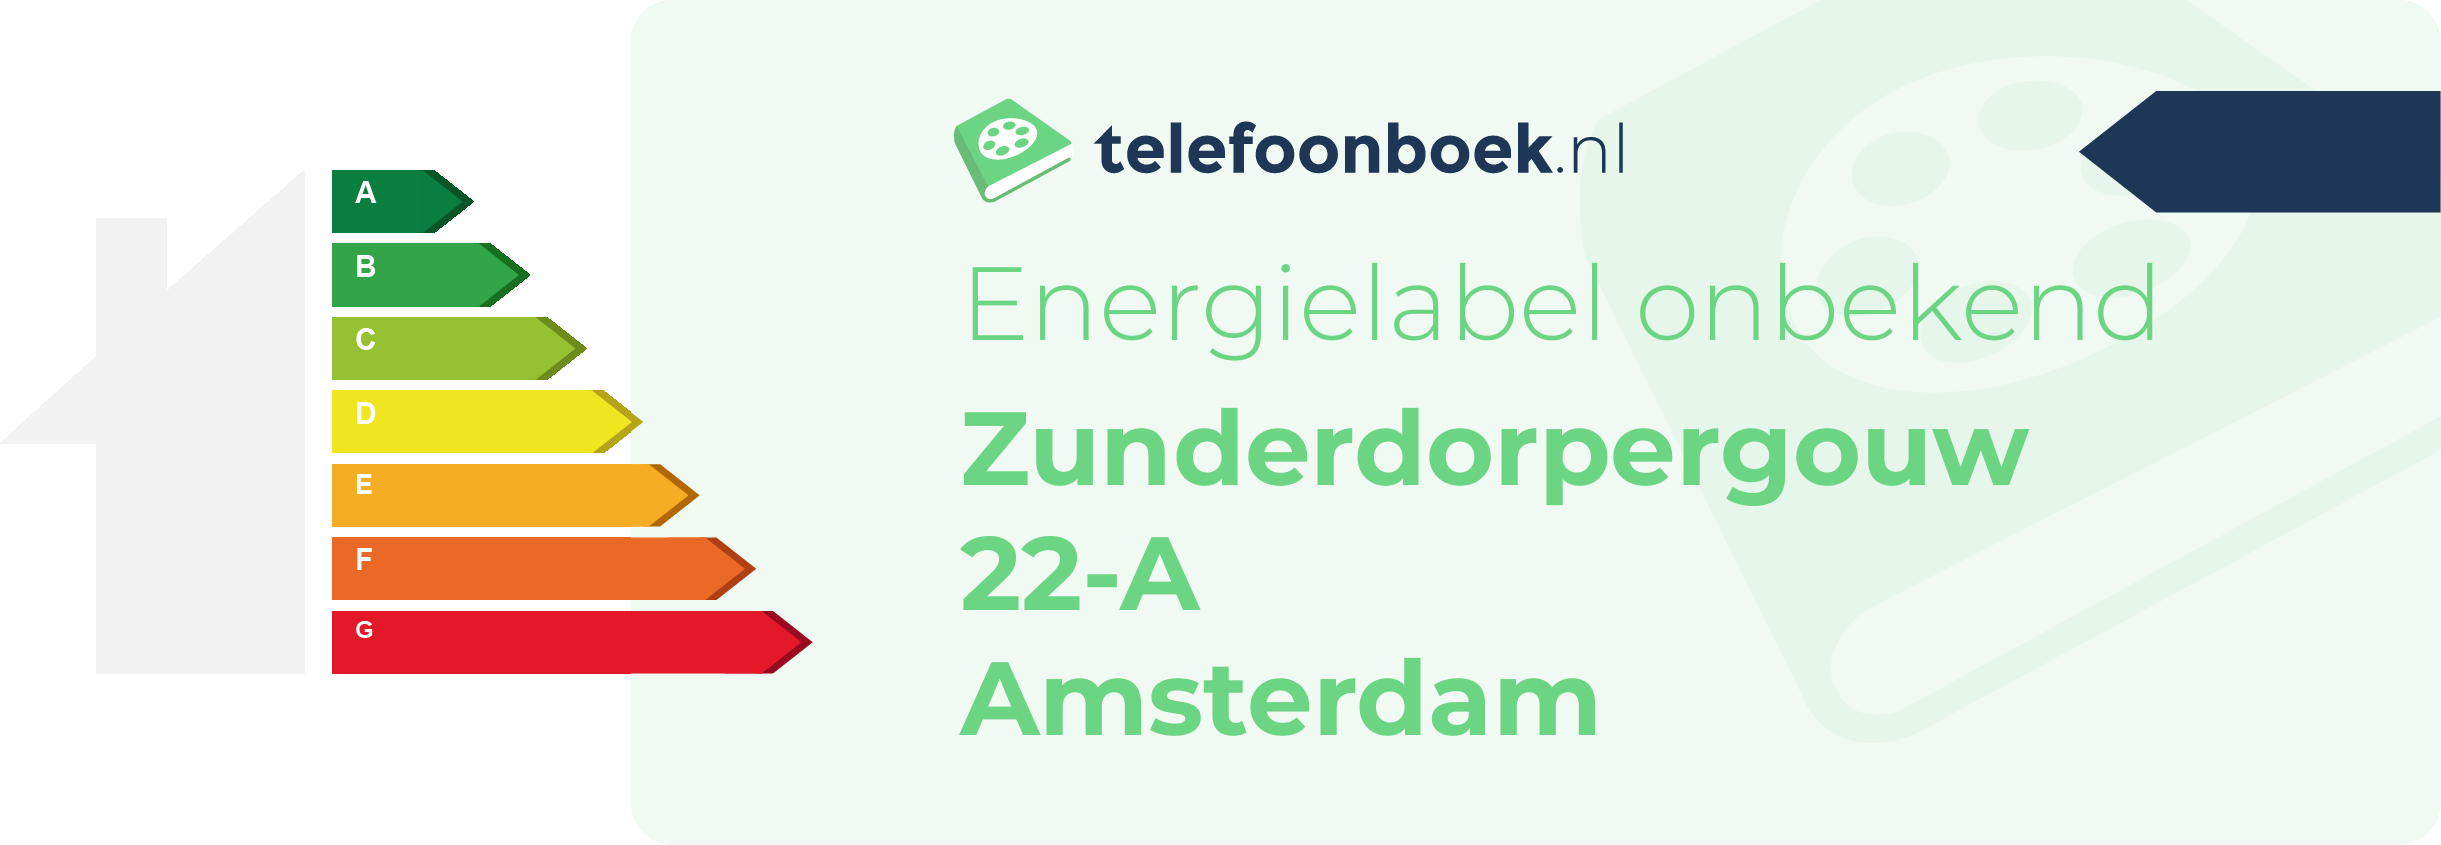 Energielabel Zunderdorpergouw 22-A Amsterdam